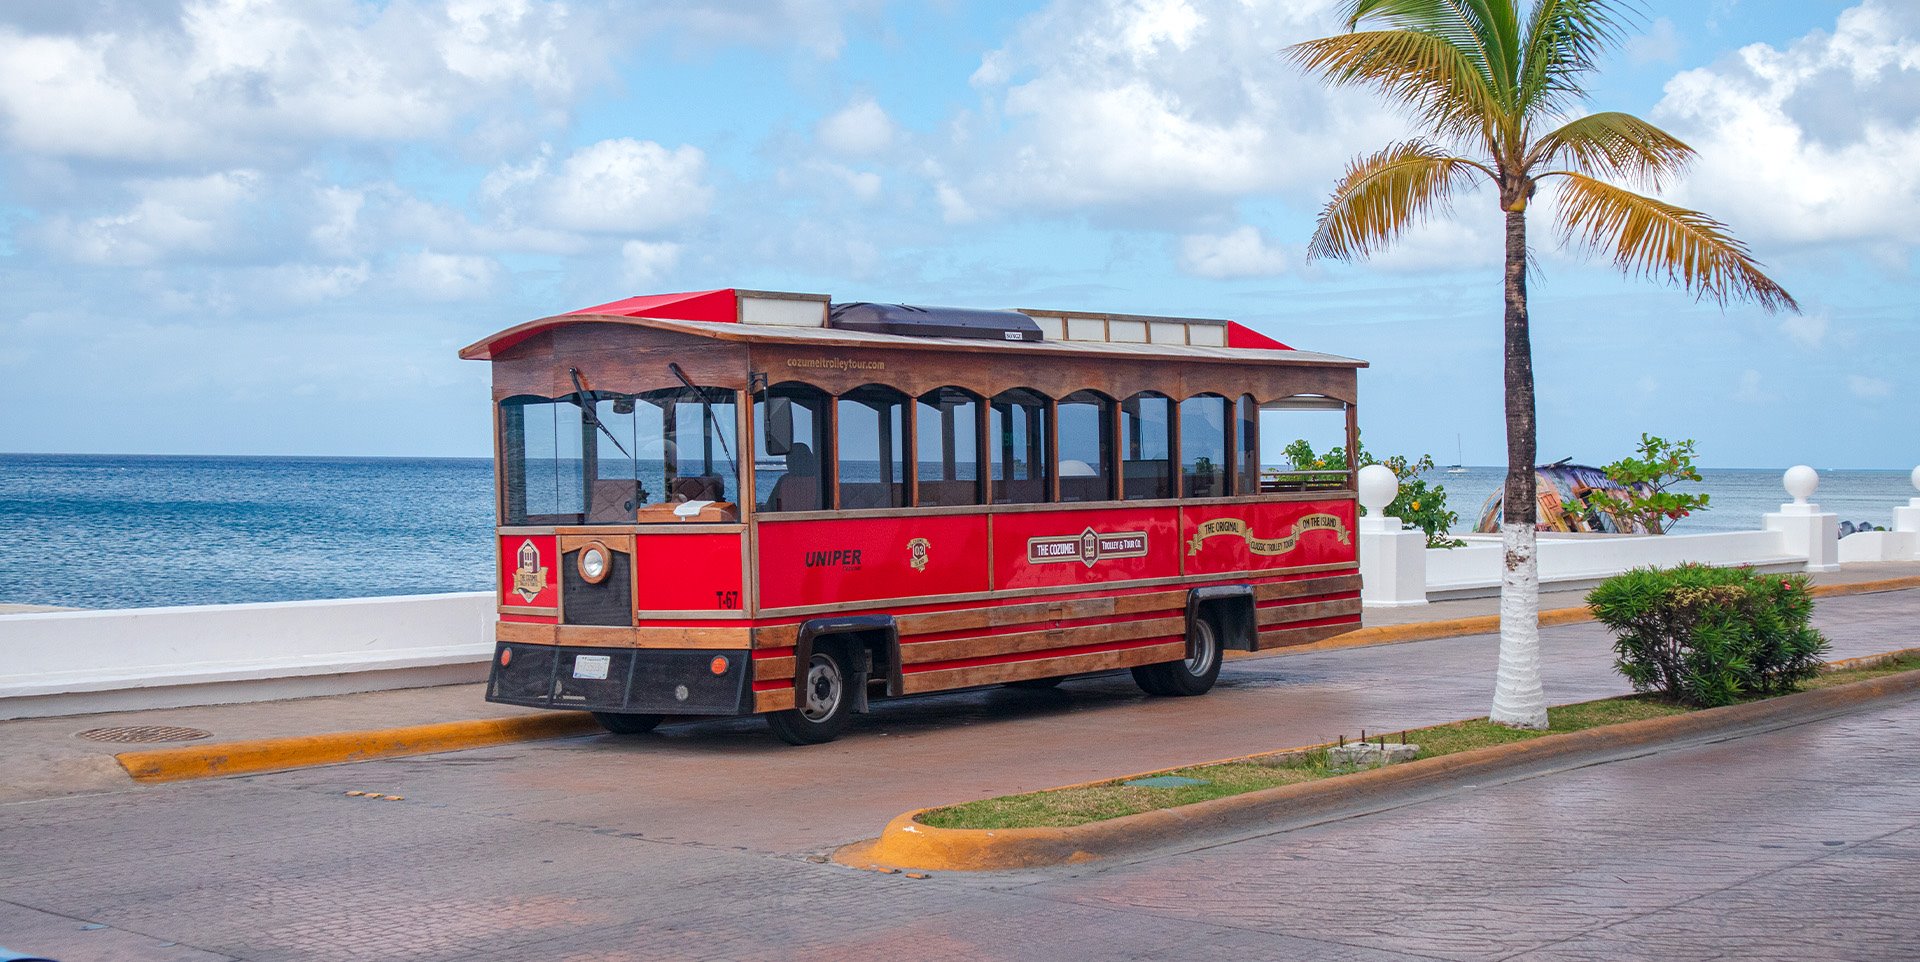 The Cozumel Trolley Tour & Co.,Cozumel,Quintana Roo